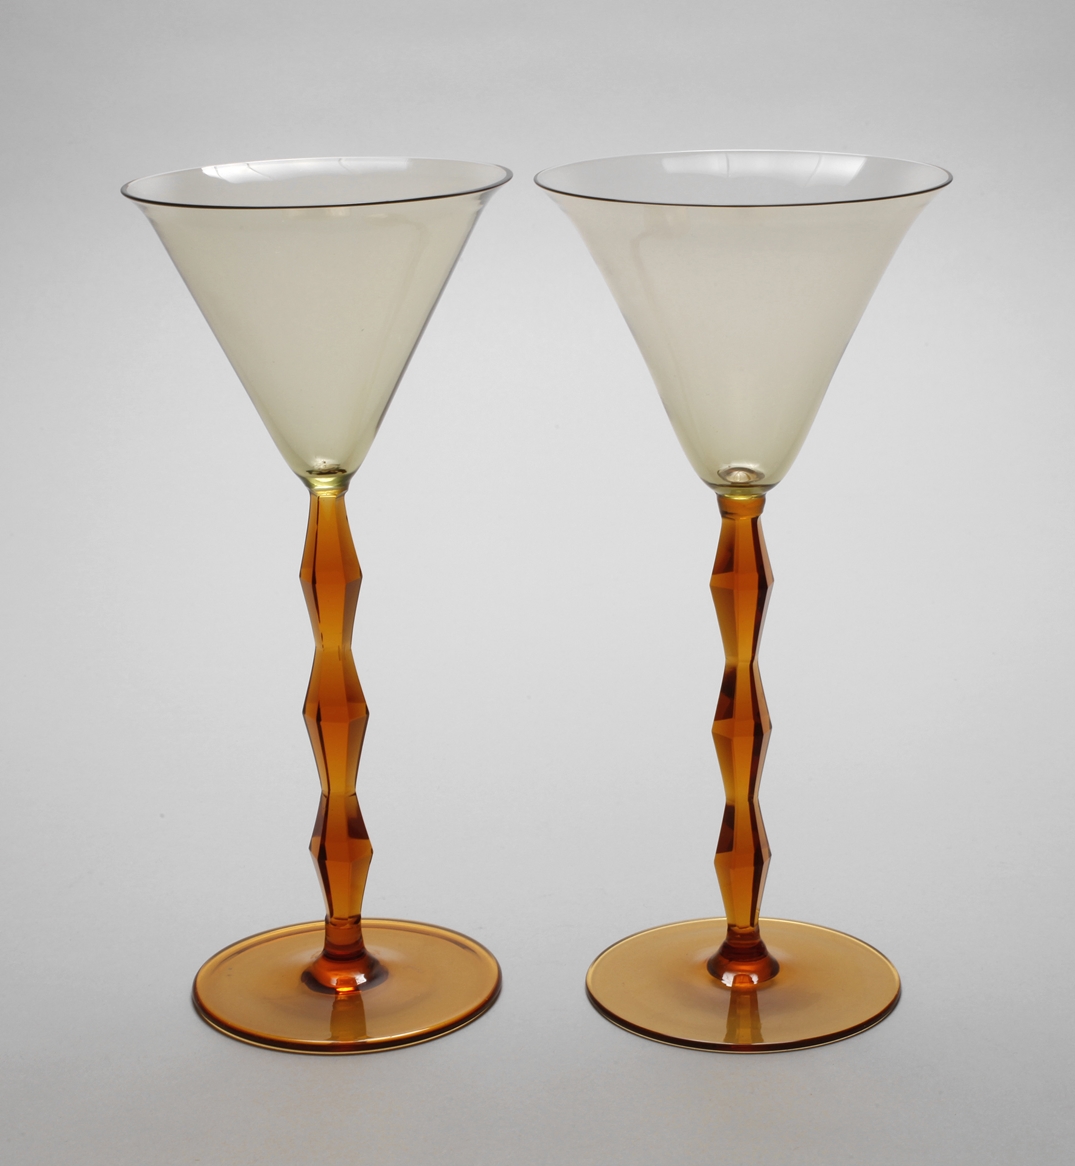 Josef Hoffmann two wine glasses